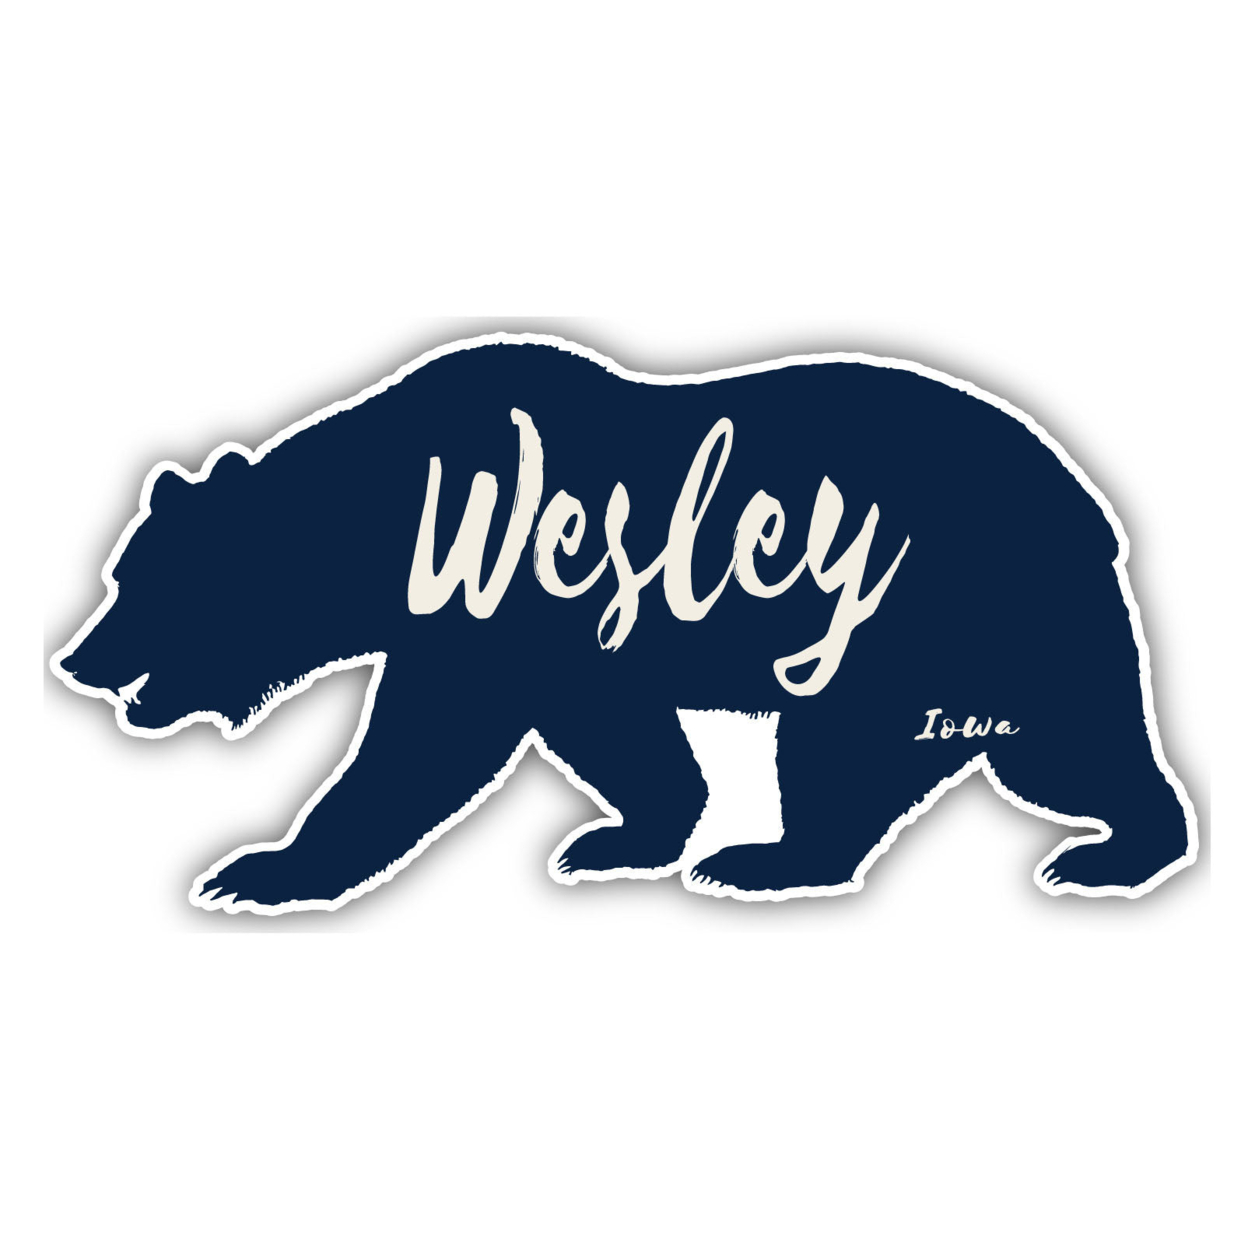 Wesley Iowa Souvenir Decorative Stickers (Choose Theme And Size) - Single Unit, 4-Inch, Bear